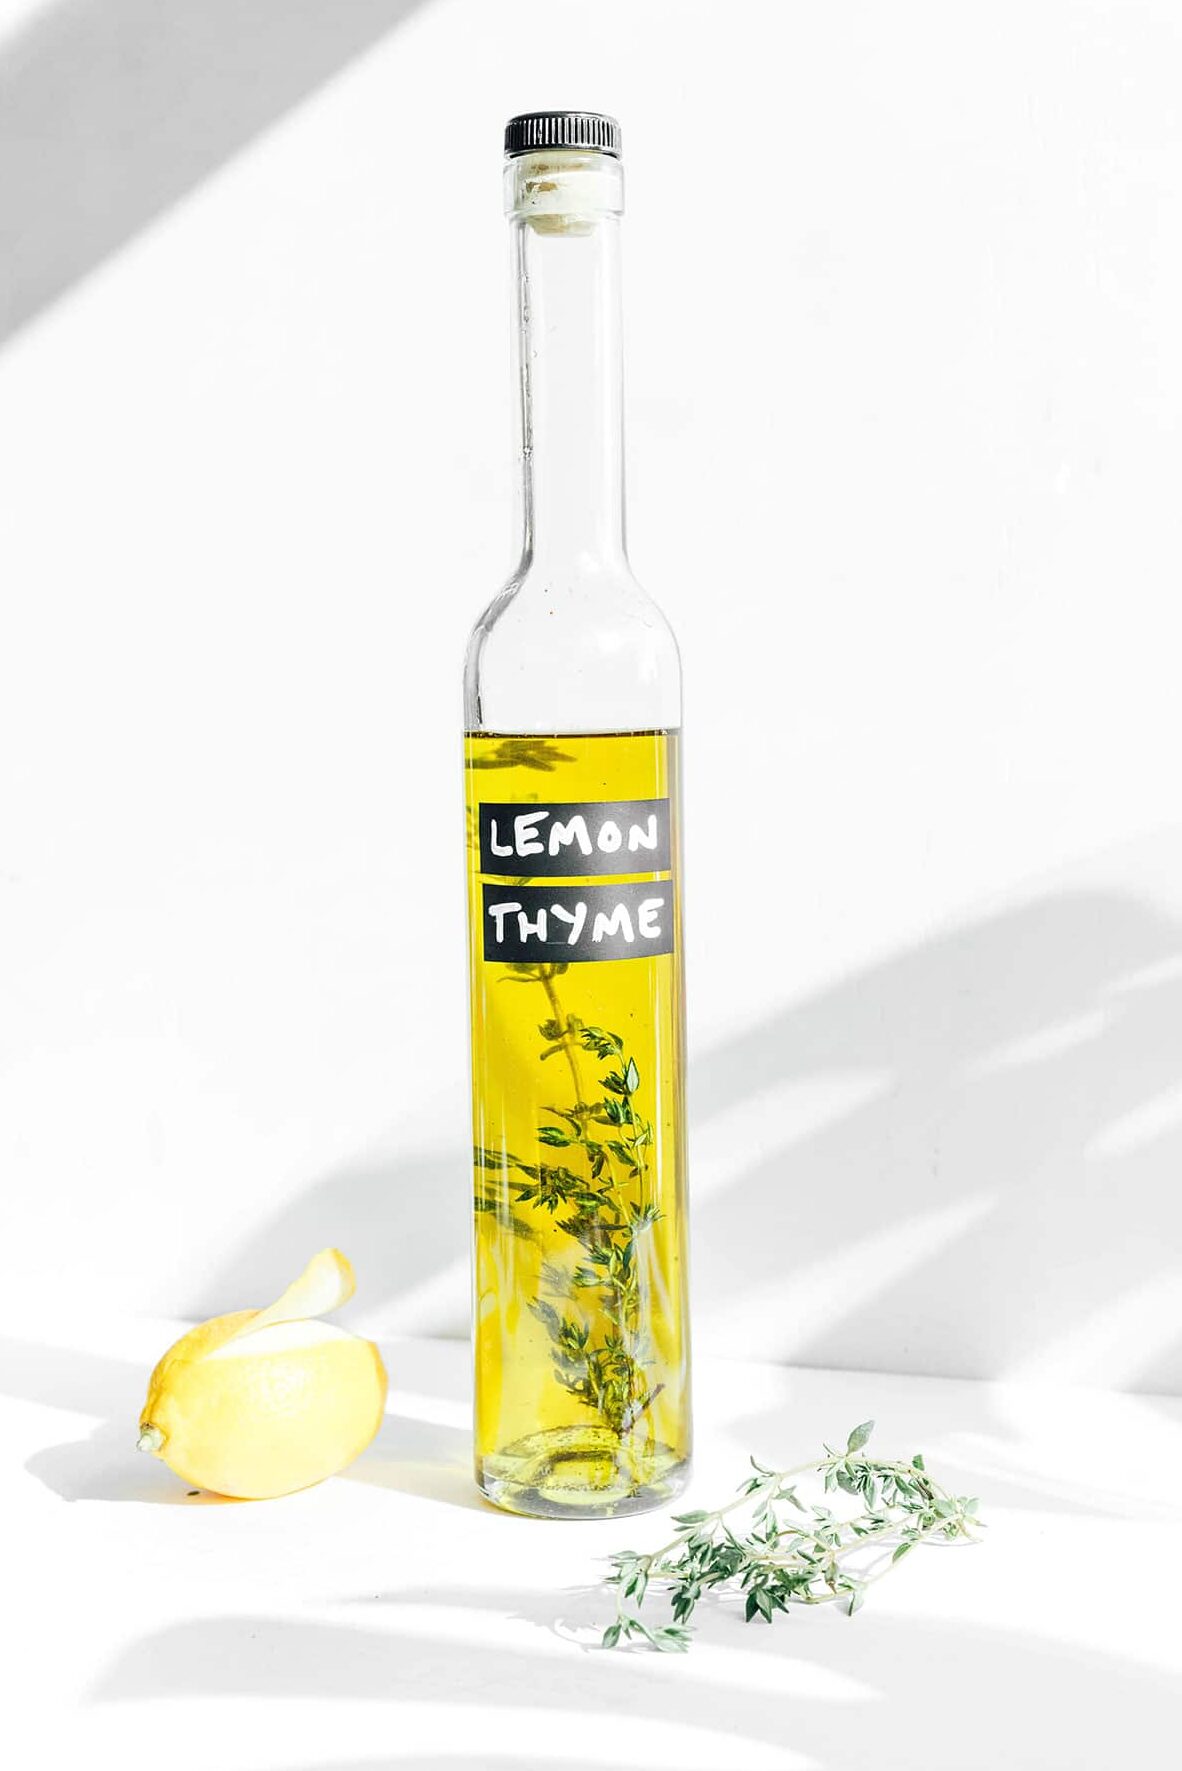 A bottle of lemon thyme infused olive oil